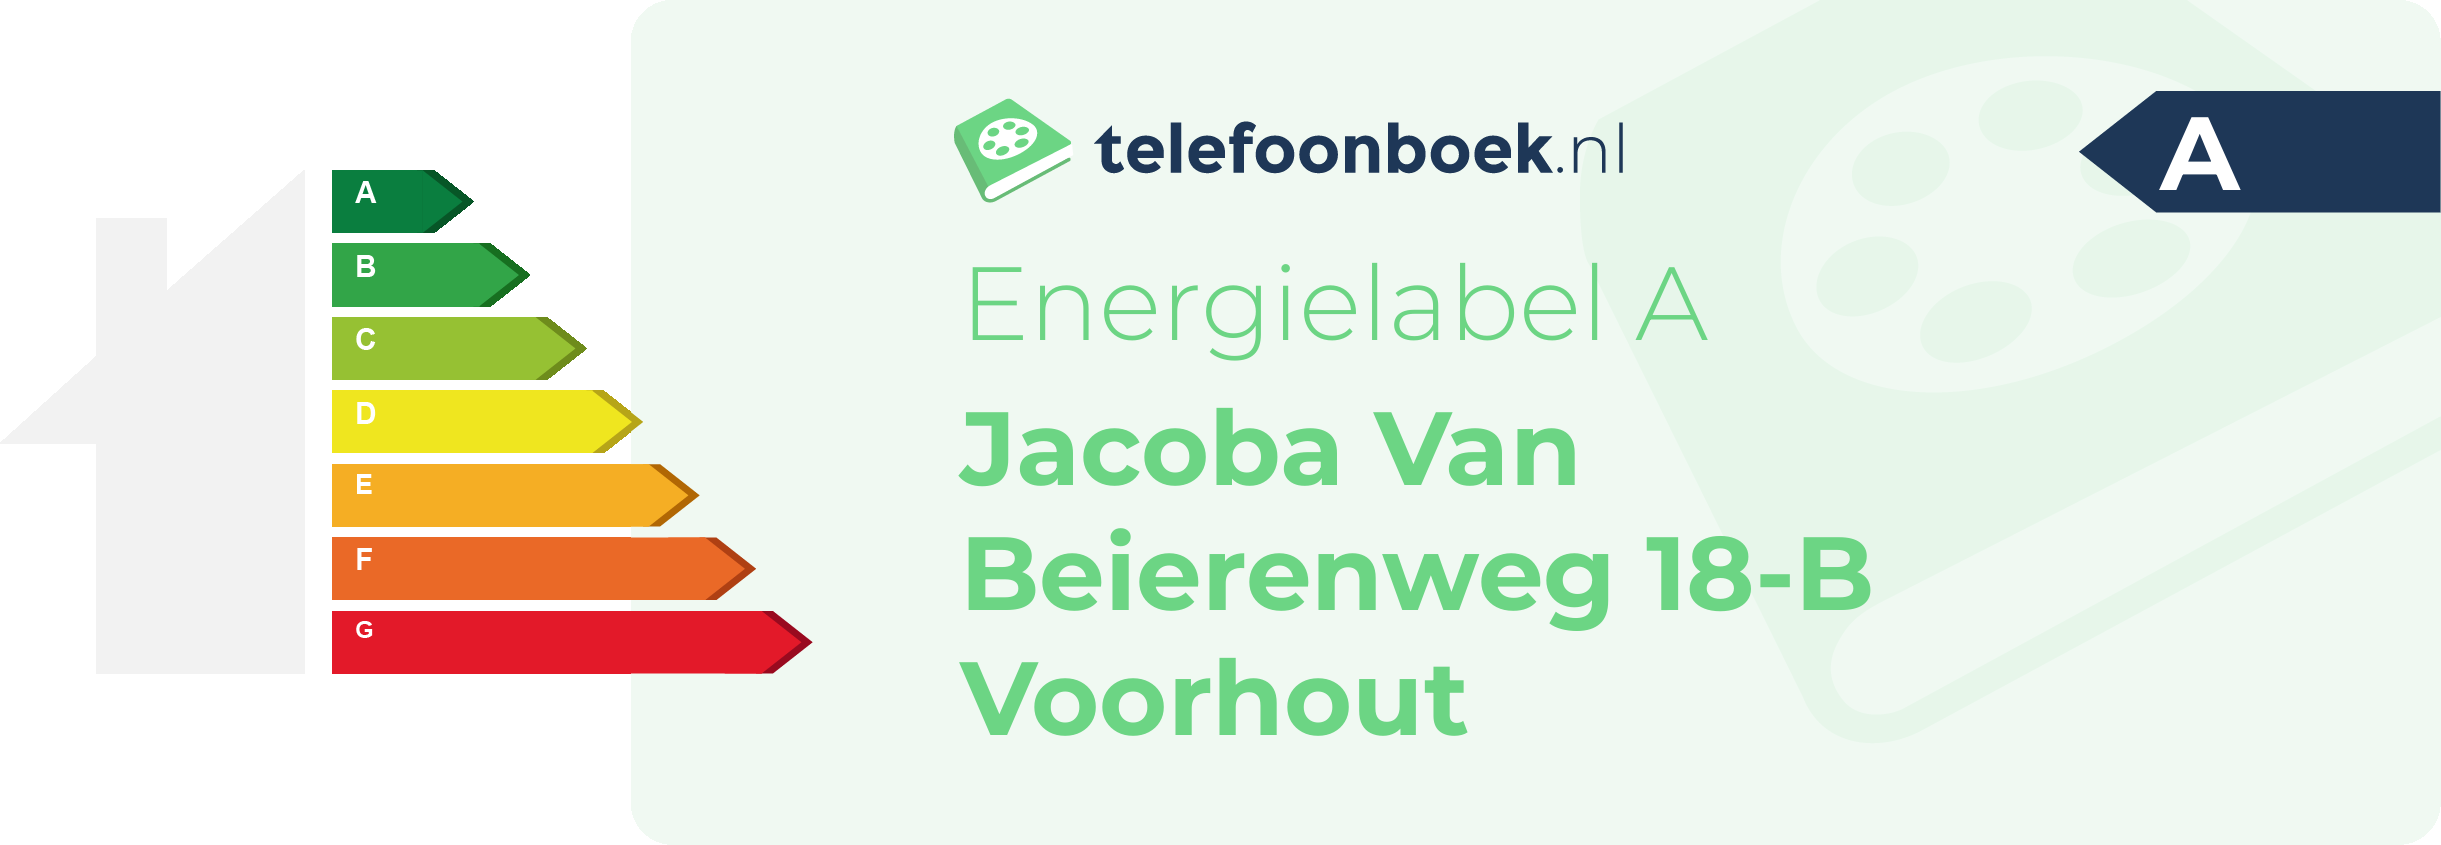 Energielabel Jacoba Van Beierenweg 18-B Voorhout